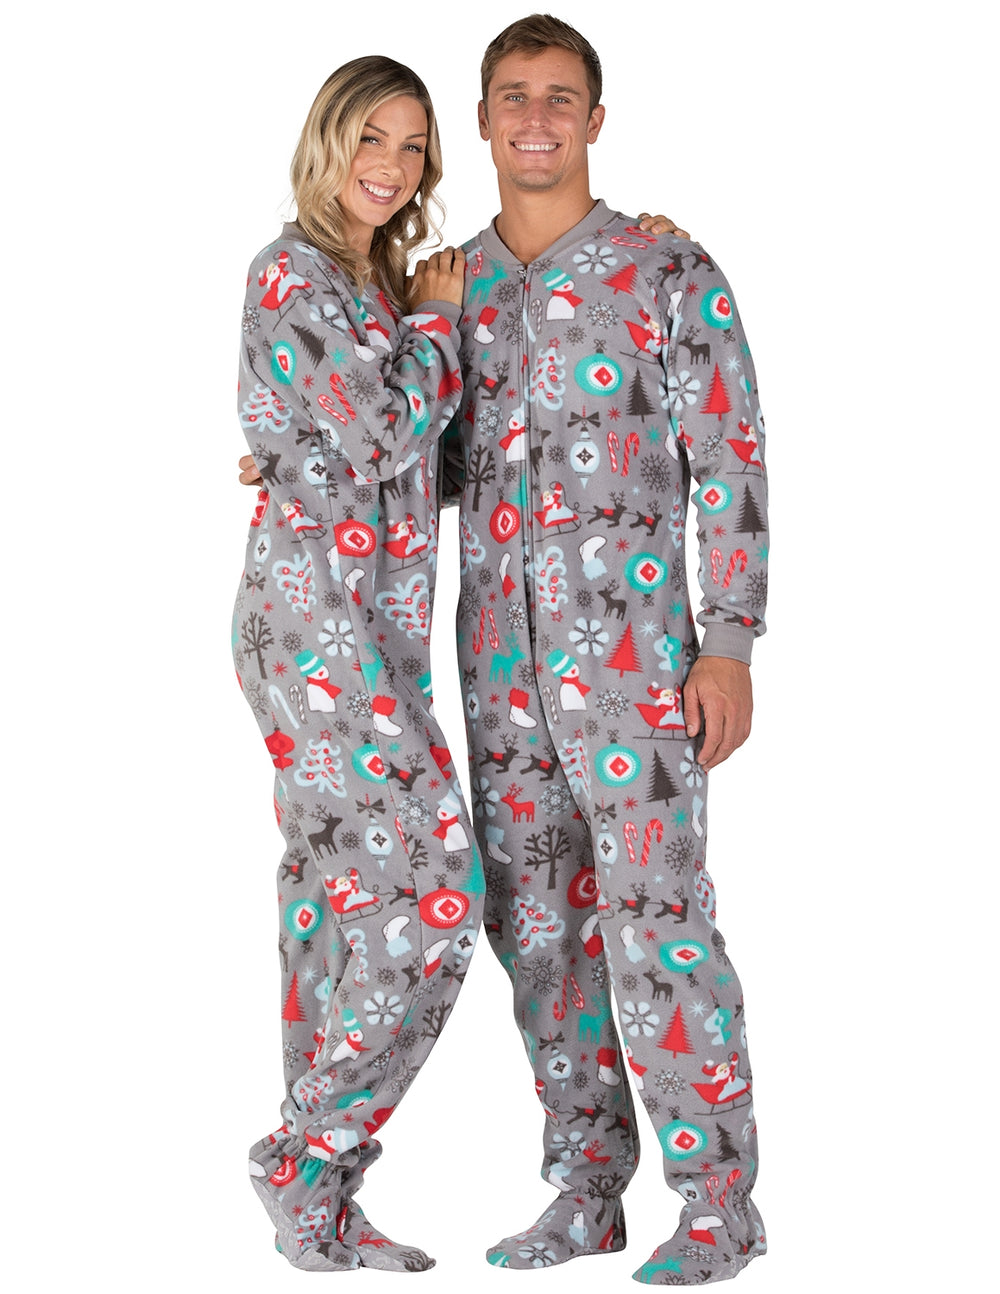 Adult Footed Pajamas Page 2 Footed Pajamas Co 9880